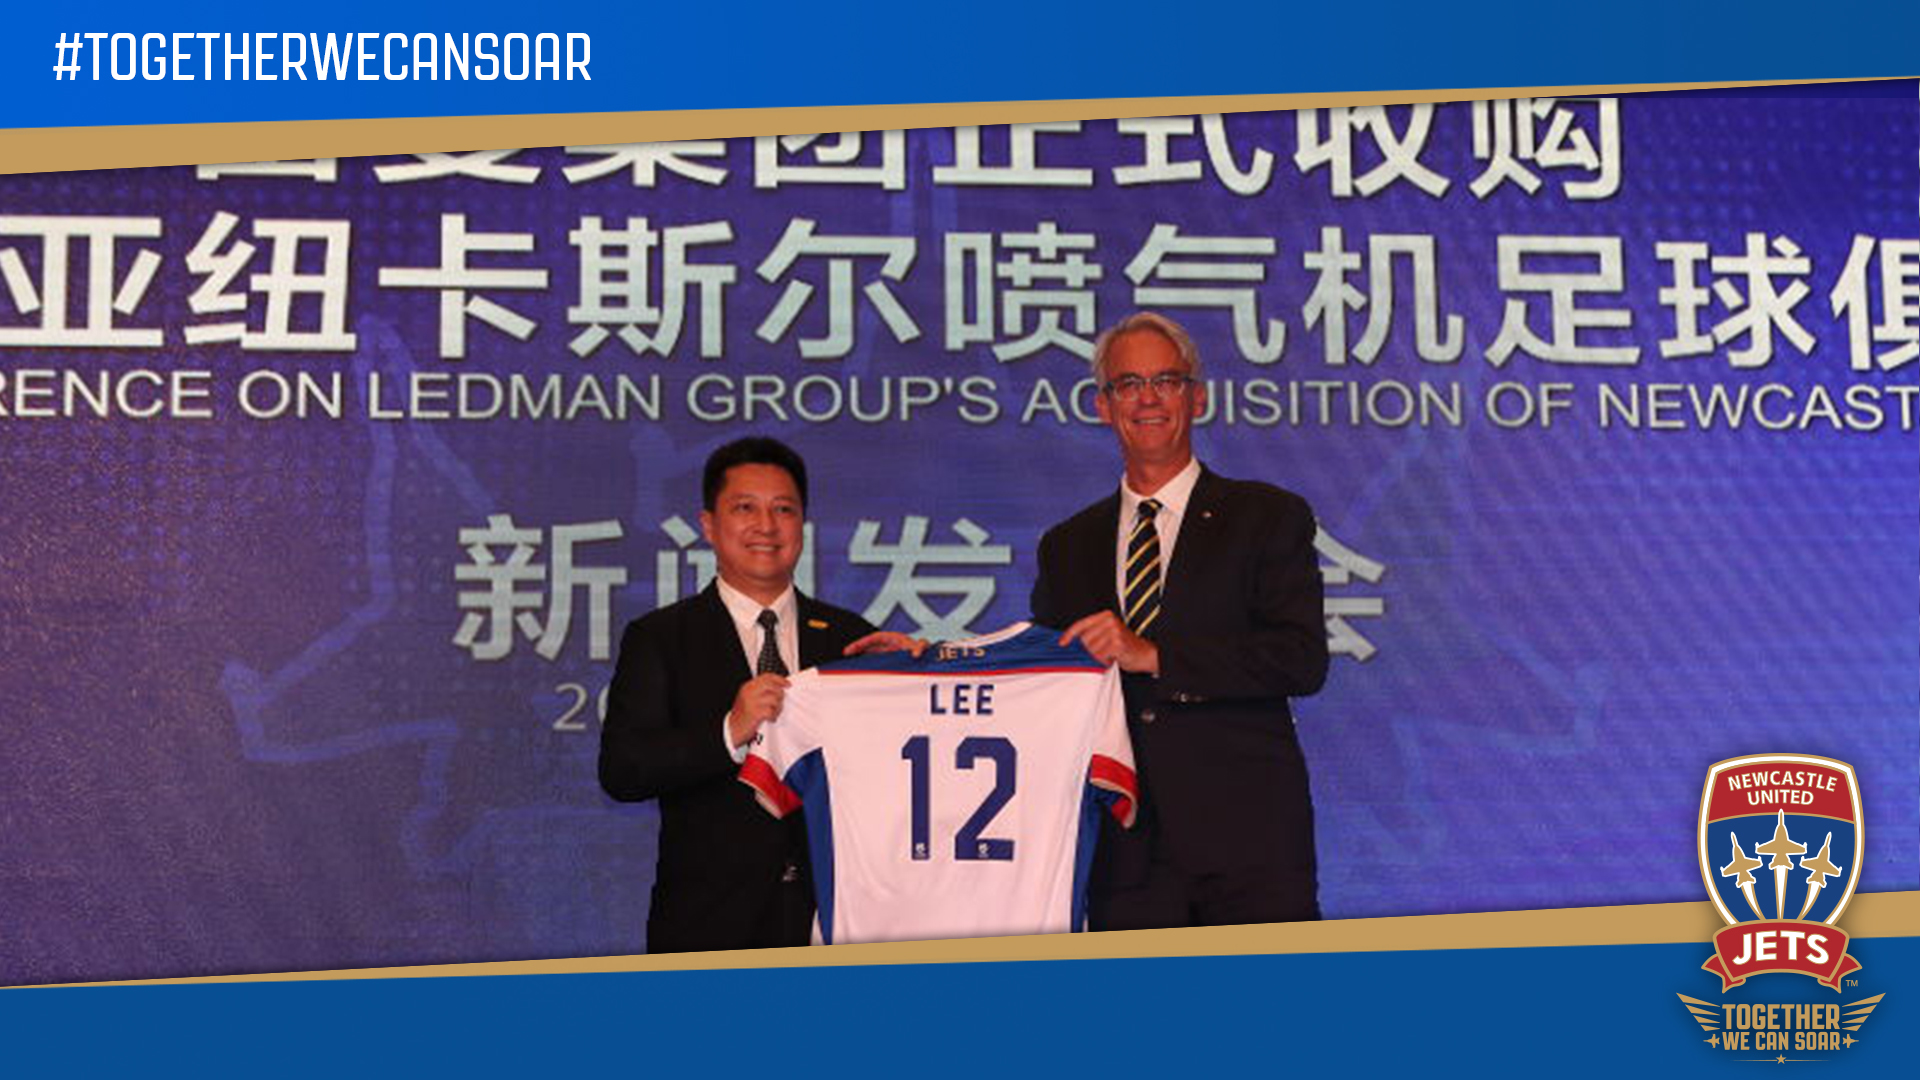 Newcastle Jets & Ledman Group Press Conference - Beijing, China - Wednesday 6 July 2016 © Ledman Group